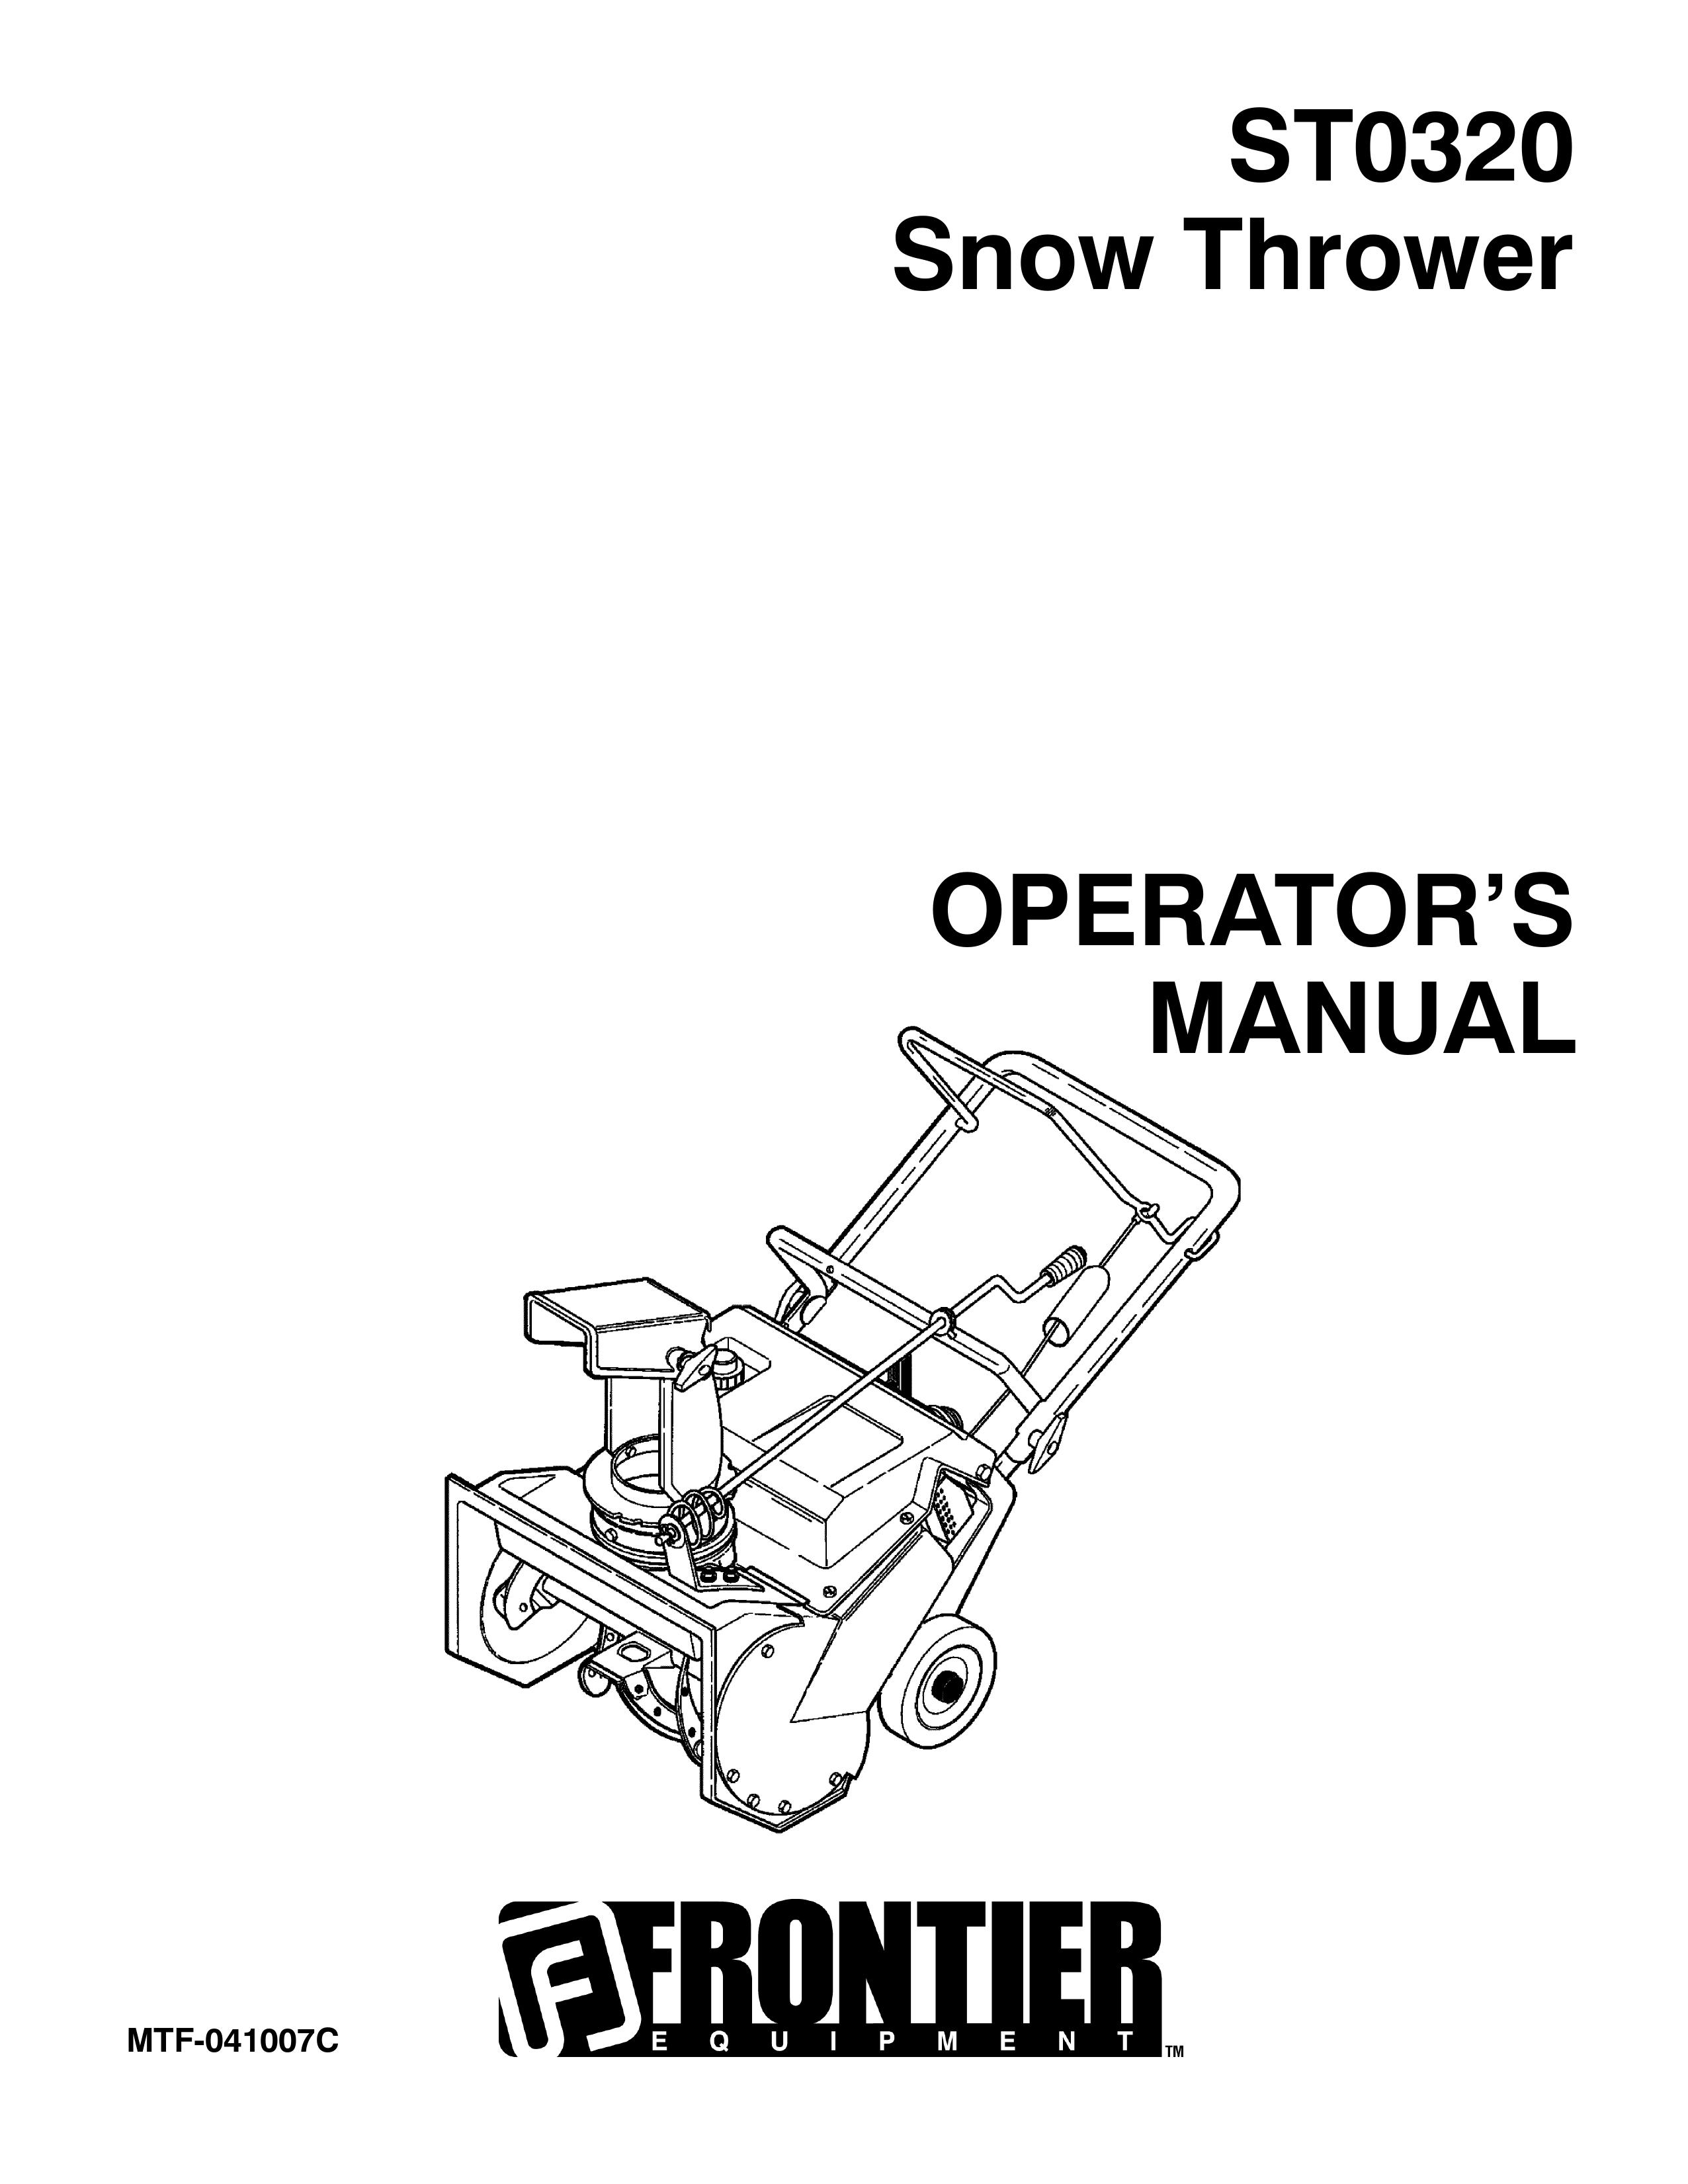 John Deere ST0320 Snow Blower User Manual